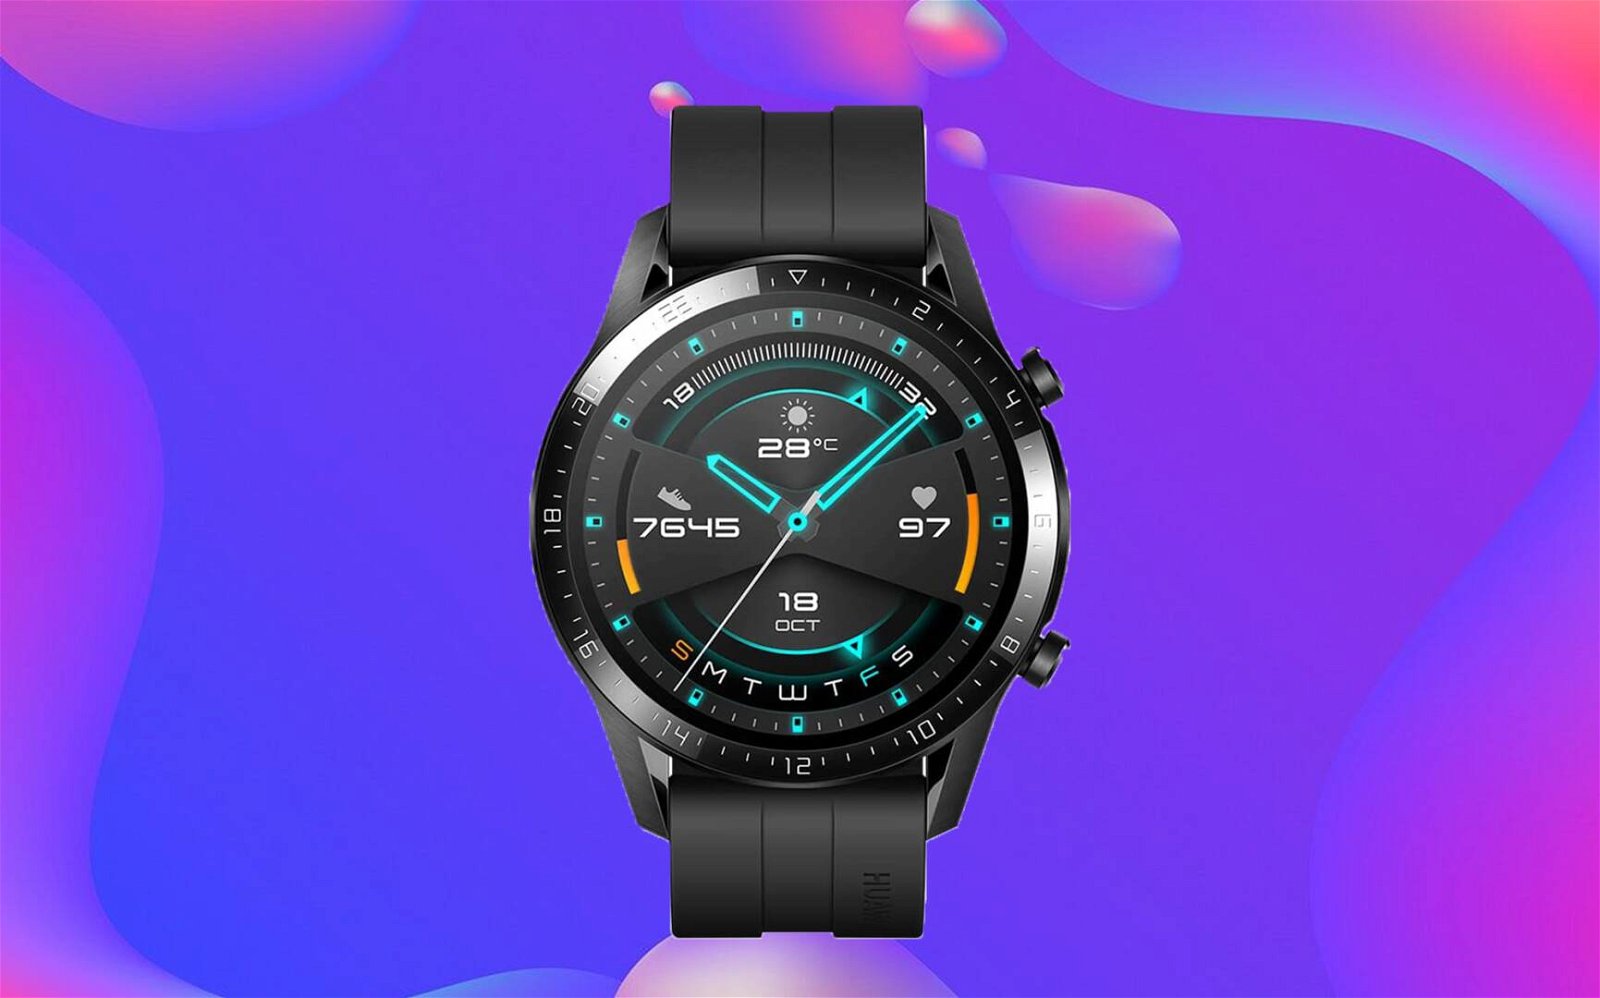 Immagine di Bomba Amazon: Huawei Watch GT 2 scontato di quasi 130€!